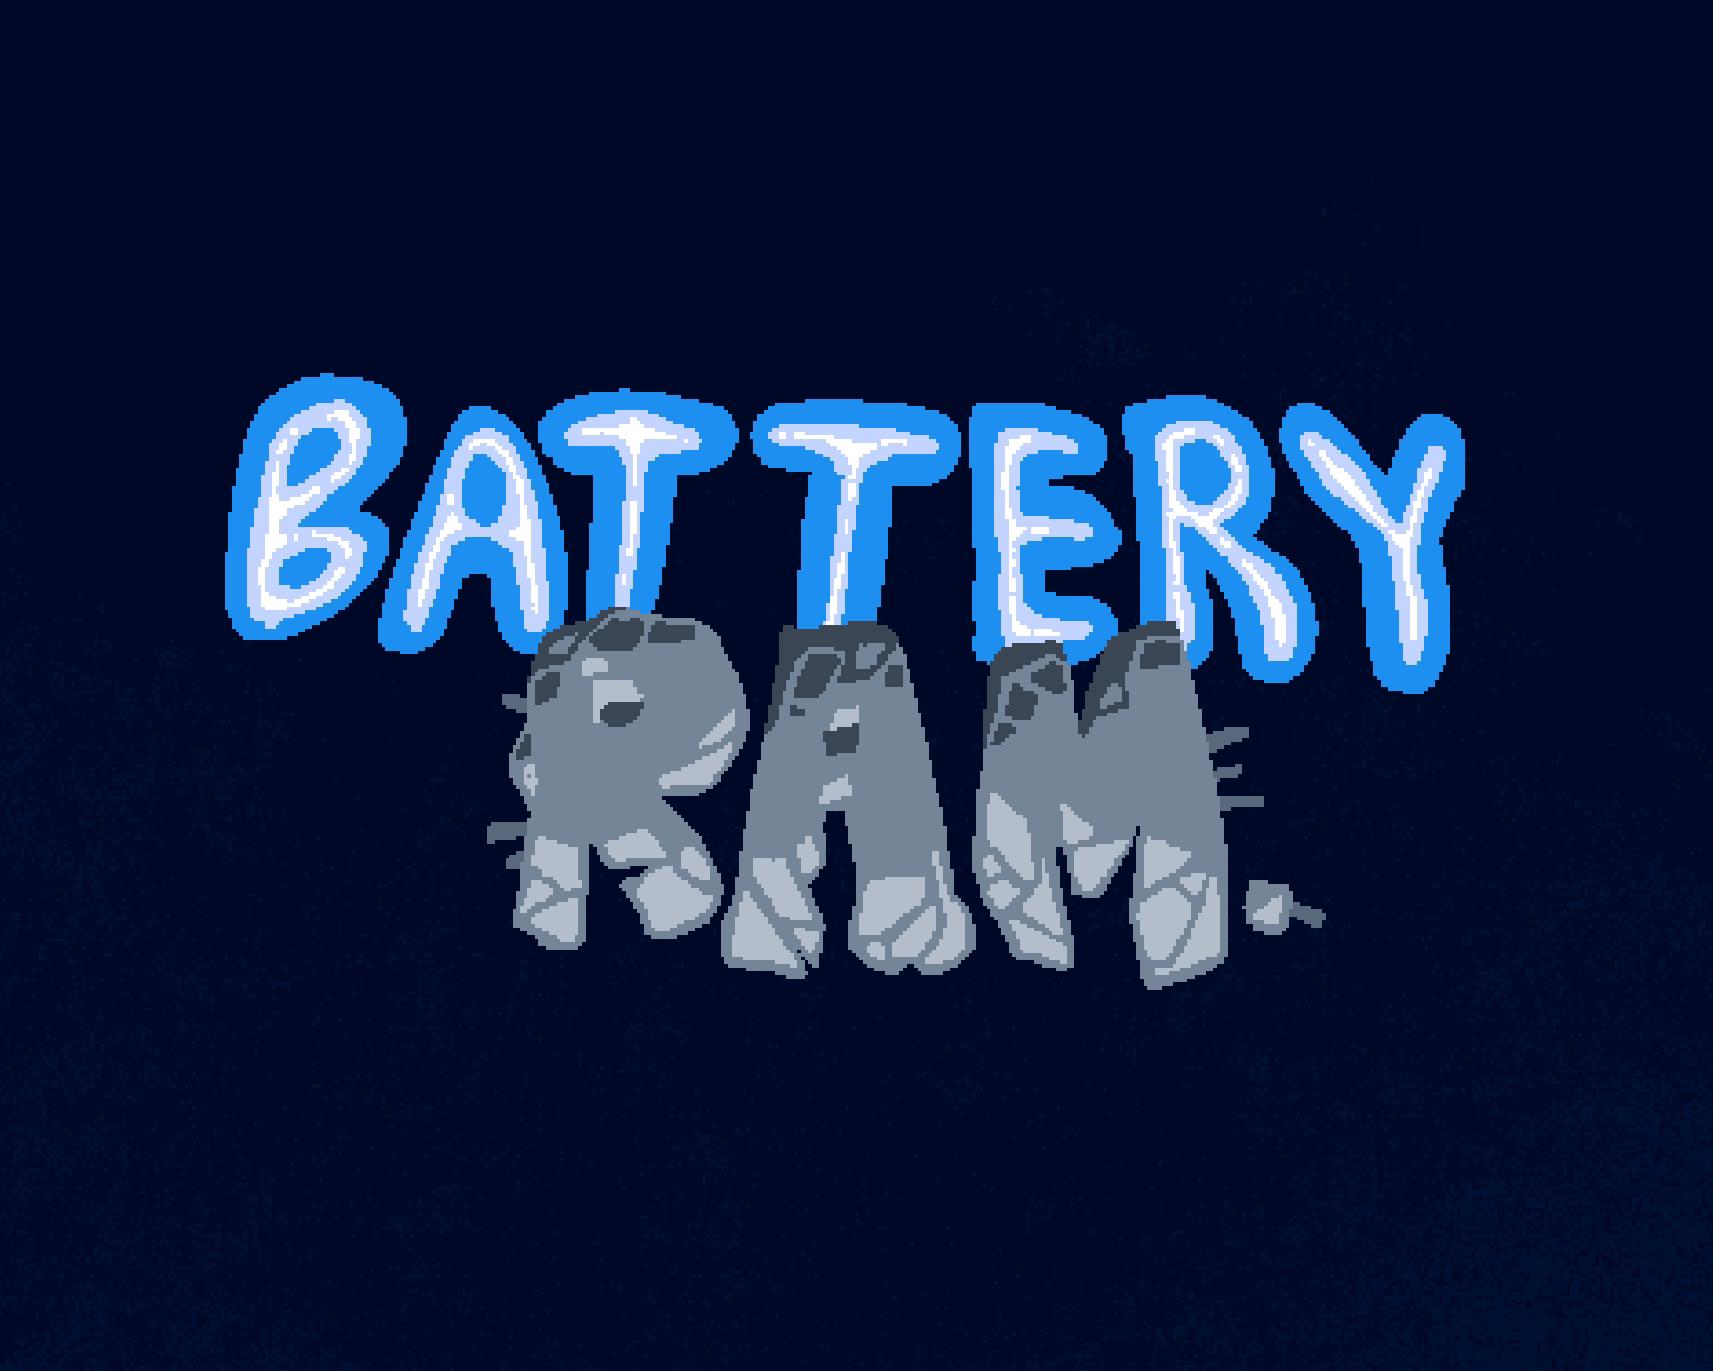 BATTERY RAM